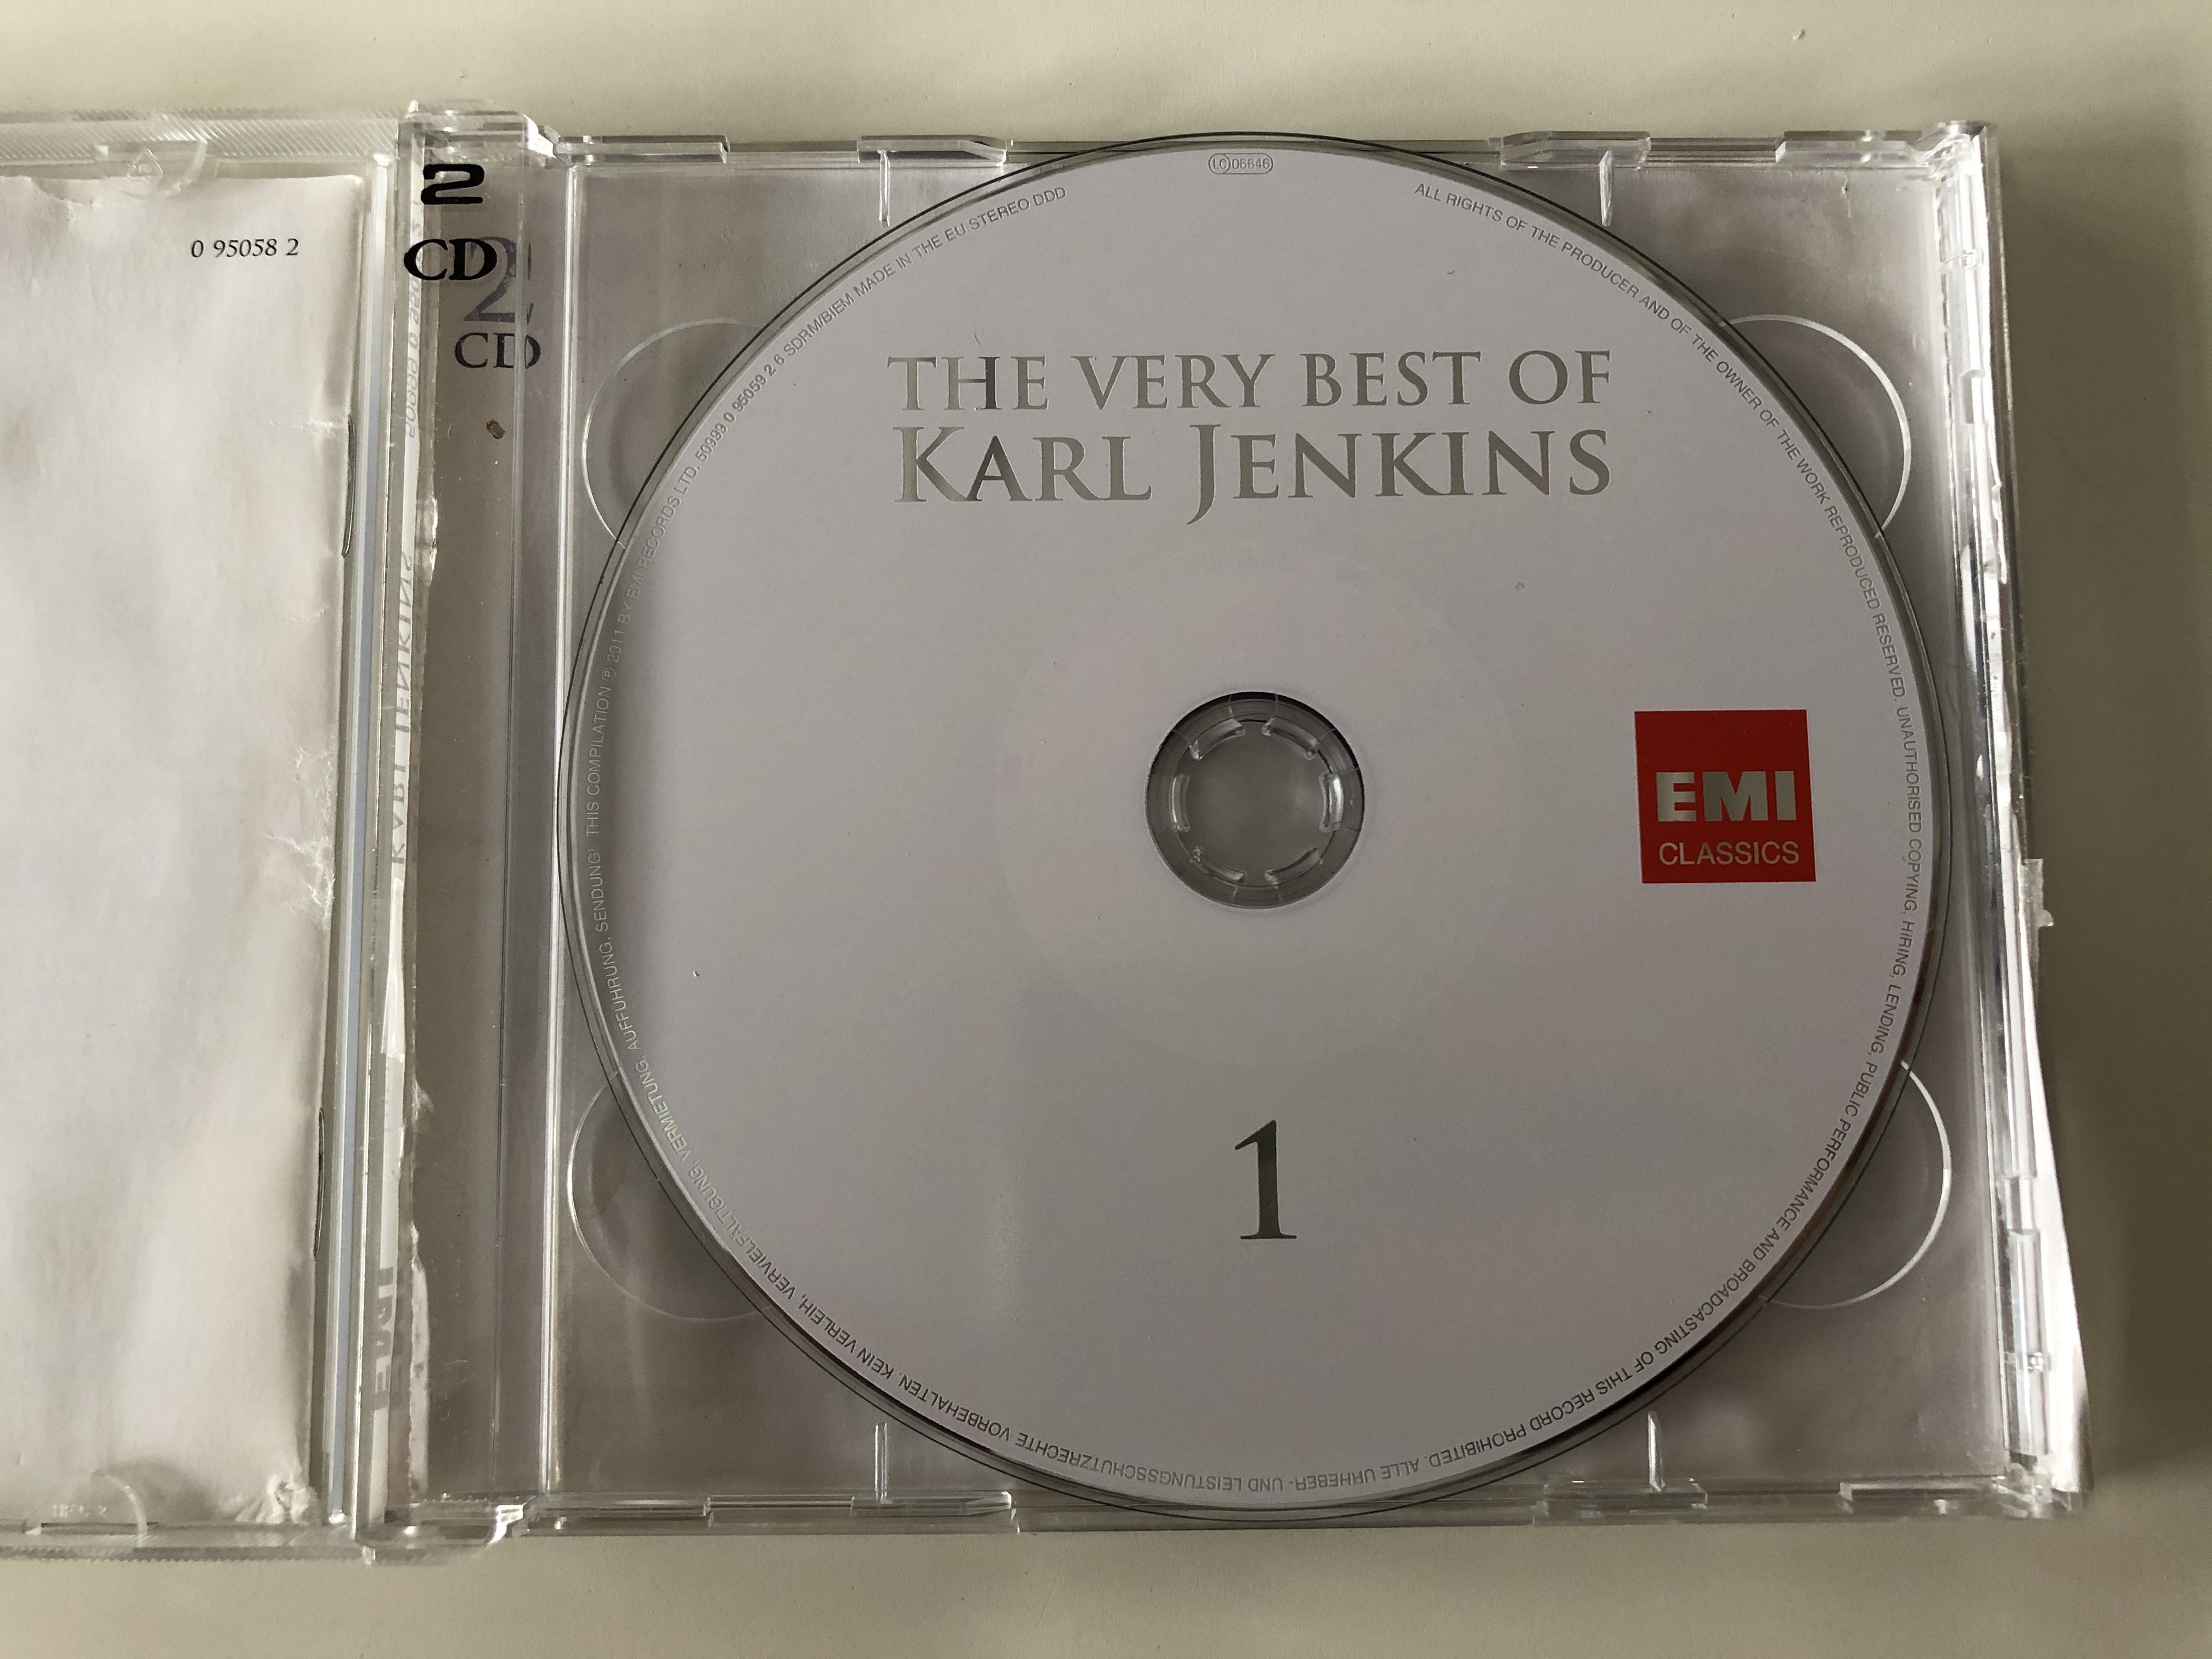 the-very-best-of-karl-jenkins-emi-classics-2x-audio-cd-2011-stereo-0-95058-2-2-.jpg